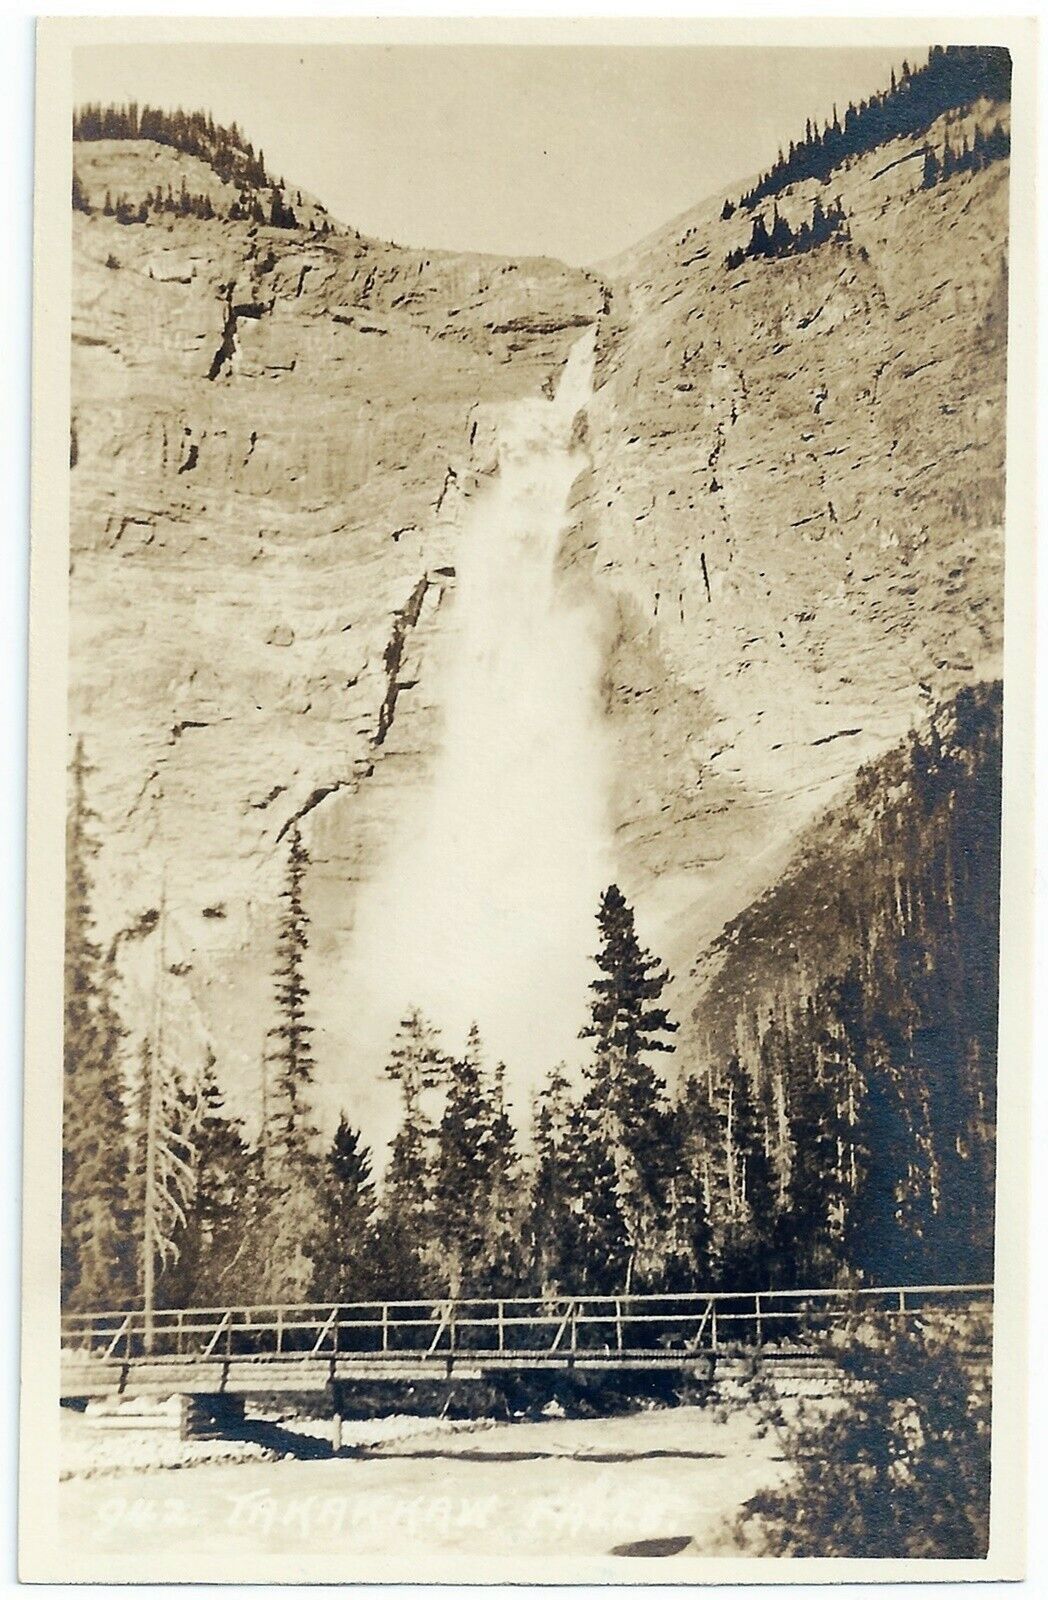 Takakkaw Falls Postcard - Early Vintage